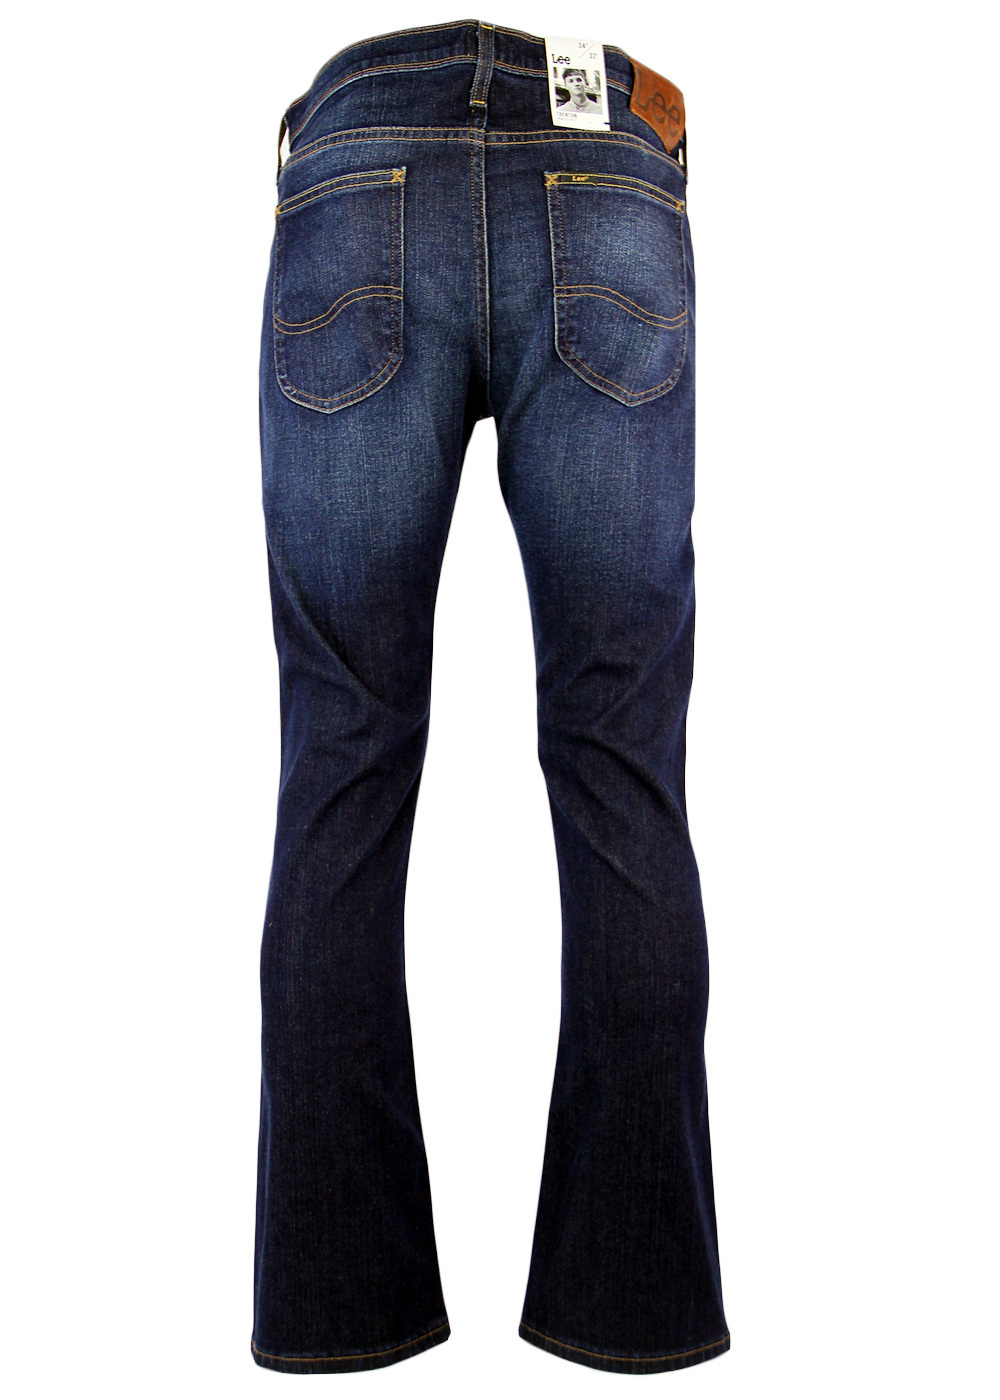 LEE Trenton Retro 1970s Bootcut Denim Jeans in Dark Blue